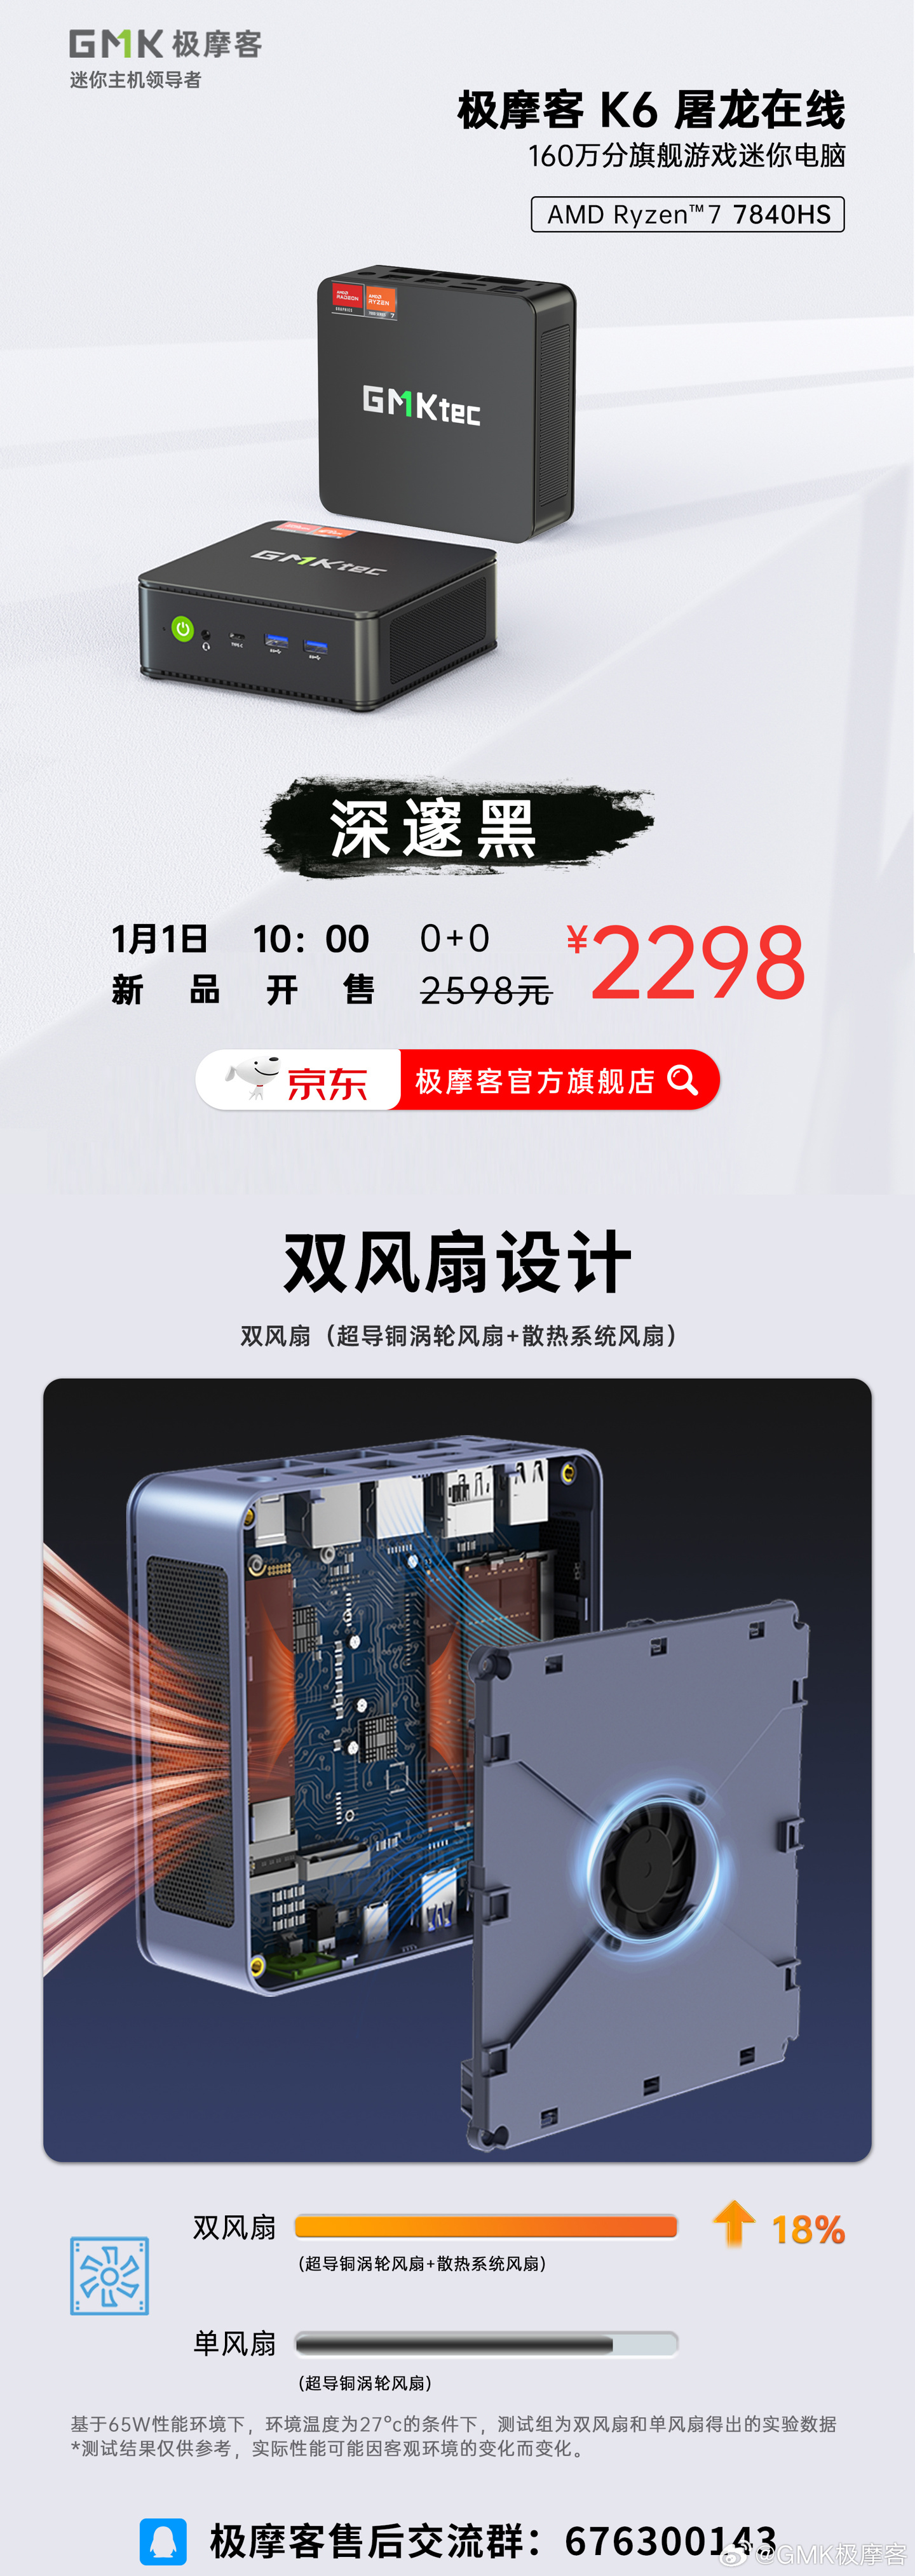 AMD R7 7840HS 深邃黑色小型主机极摩客 K6 现已上市，售价为 2298 元